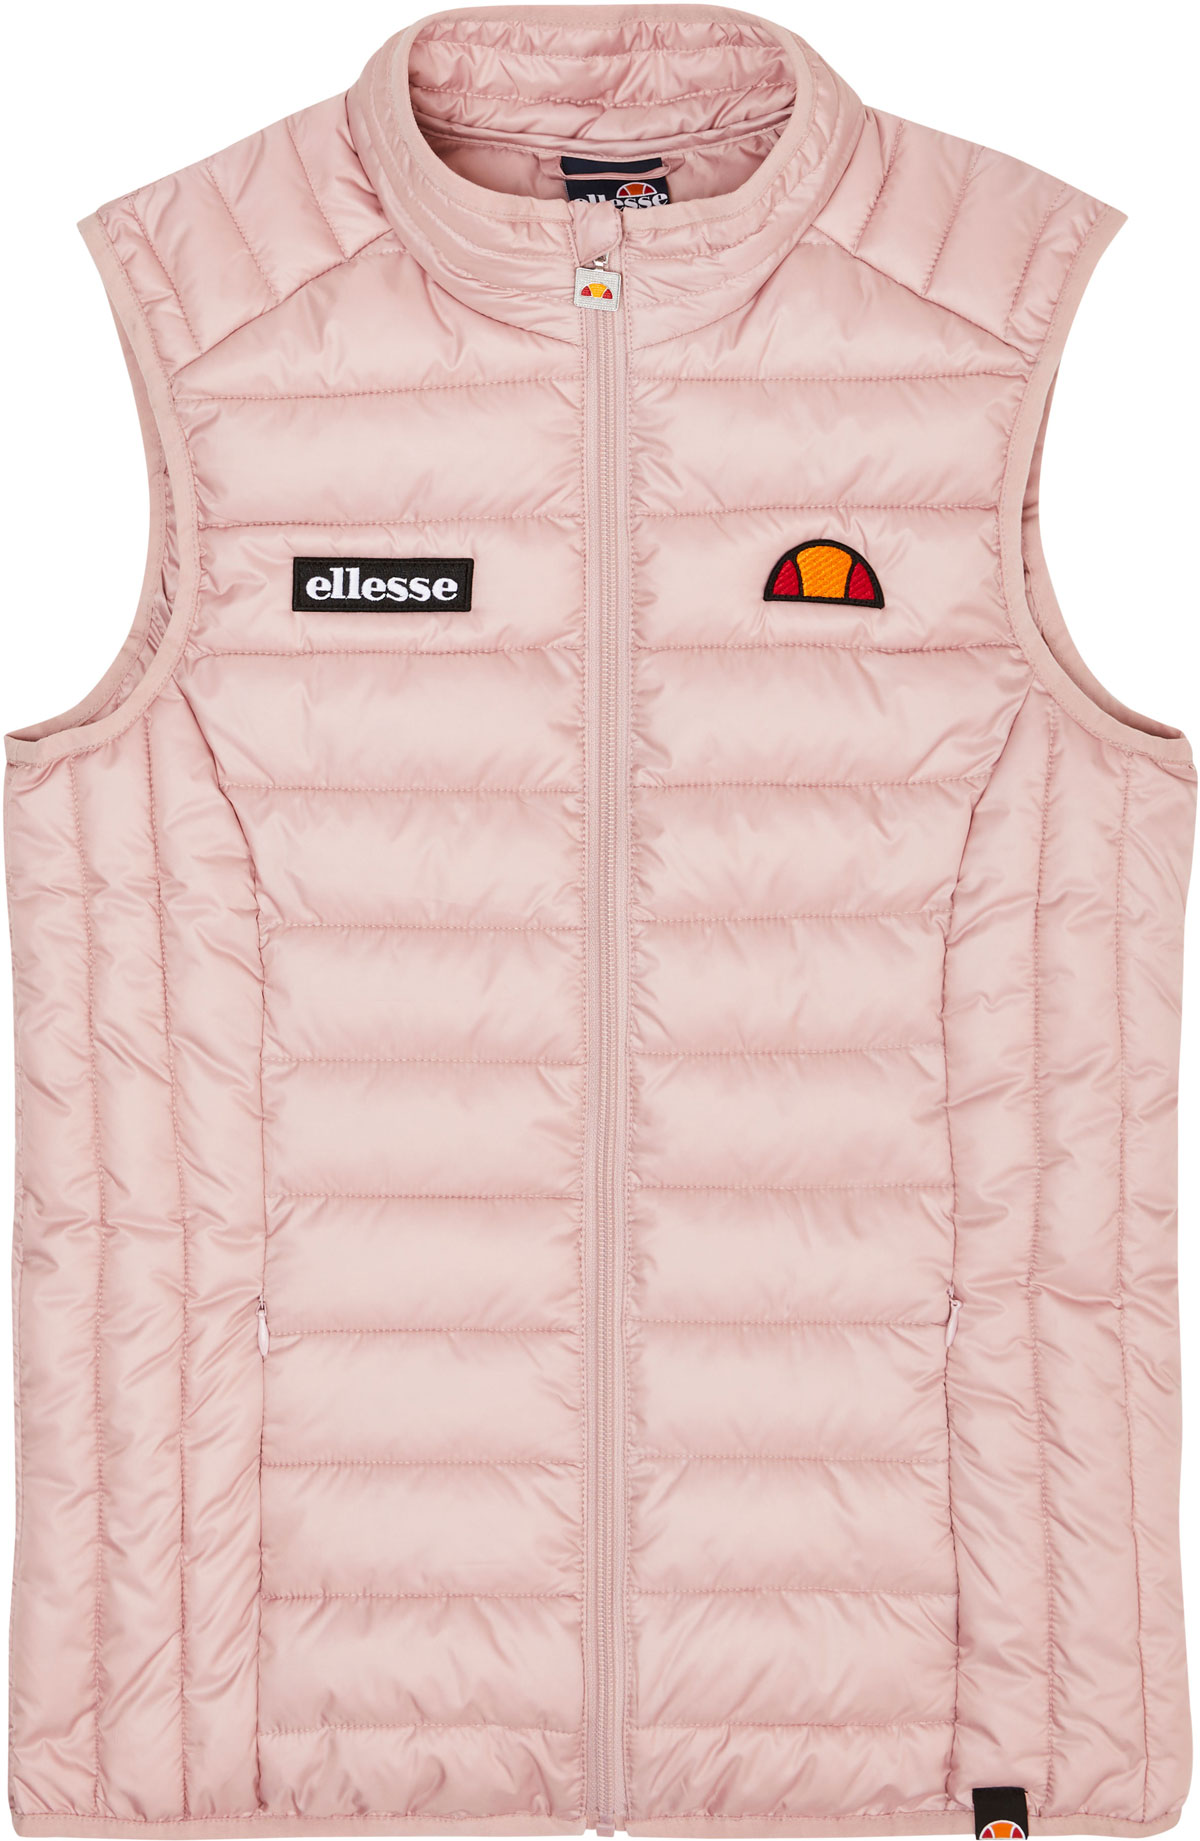 Women’s quilted vest